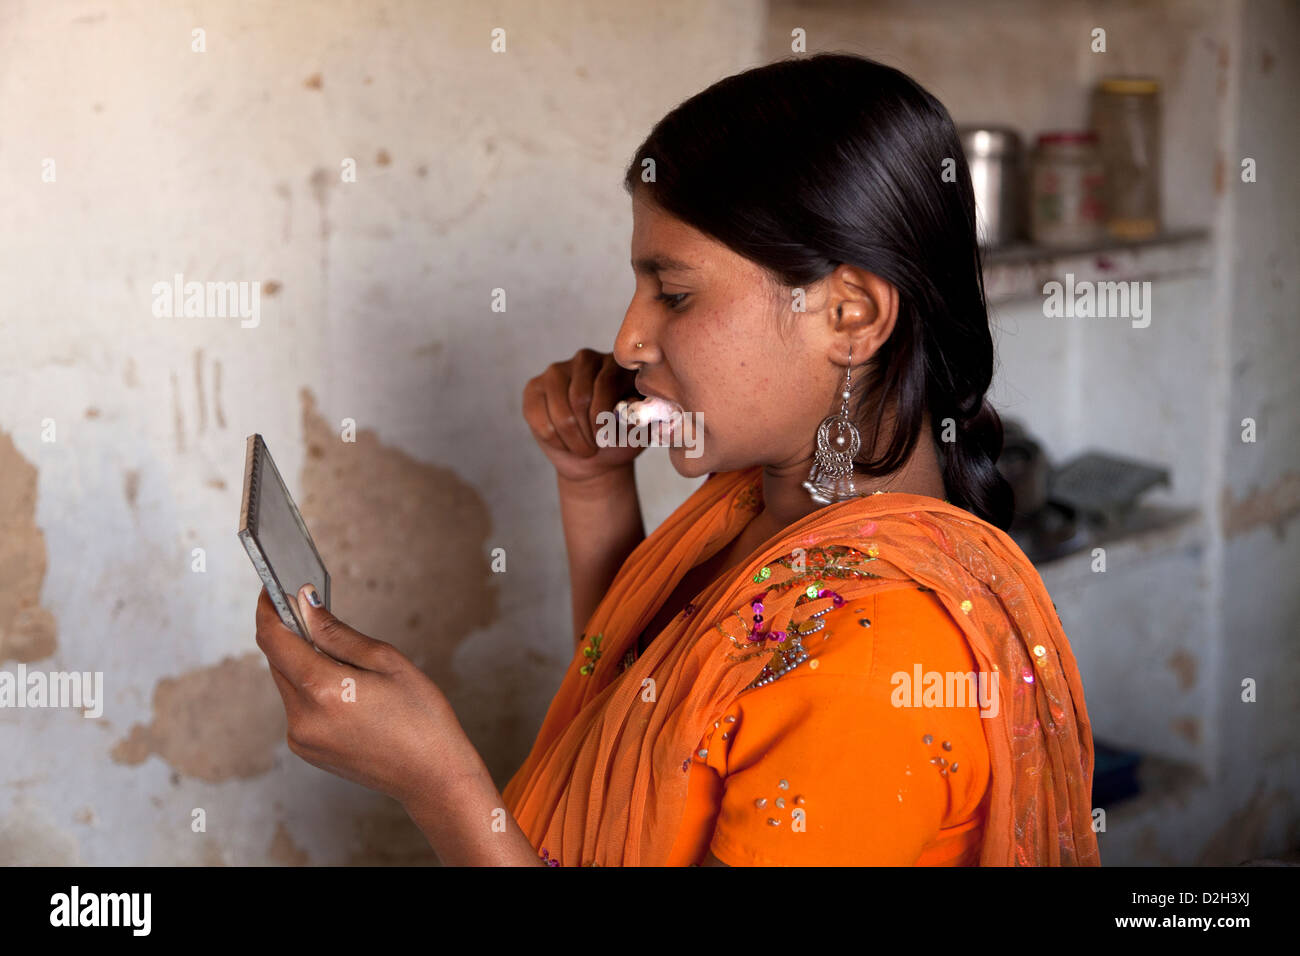 India, uttar Pradesh, Agra Teenage girl brushing teeth with clear evidence of mosquito bites on face Stock Photo